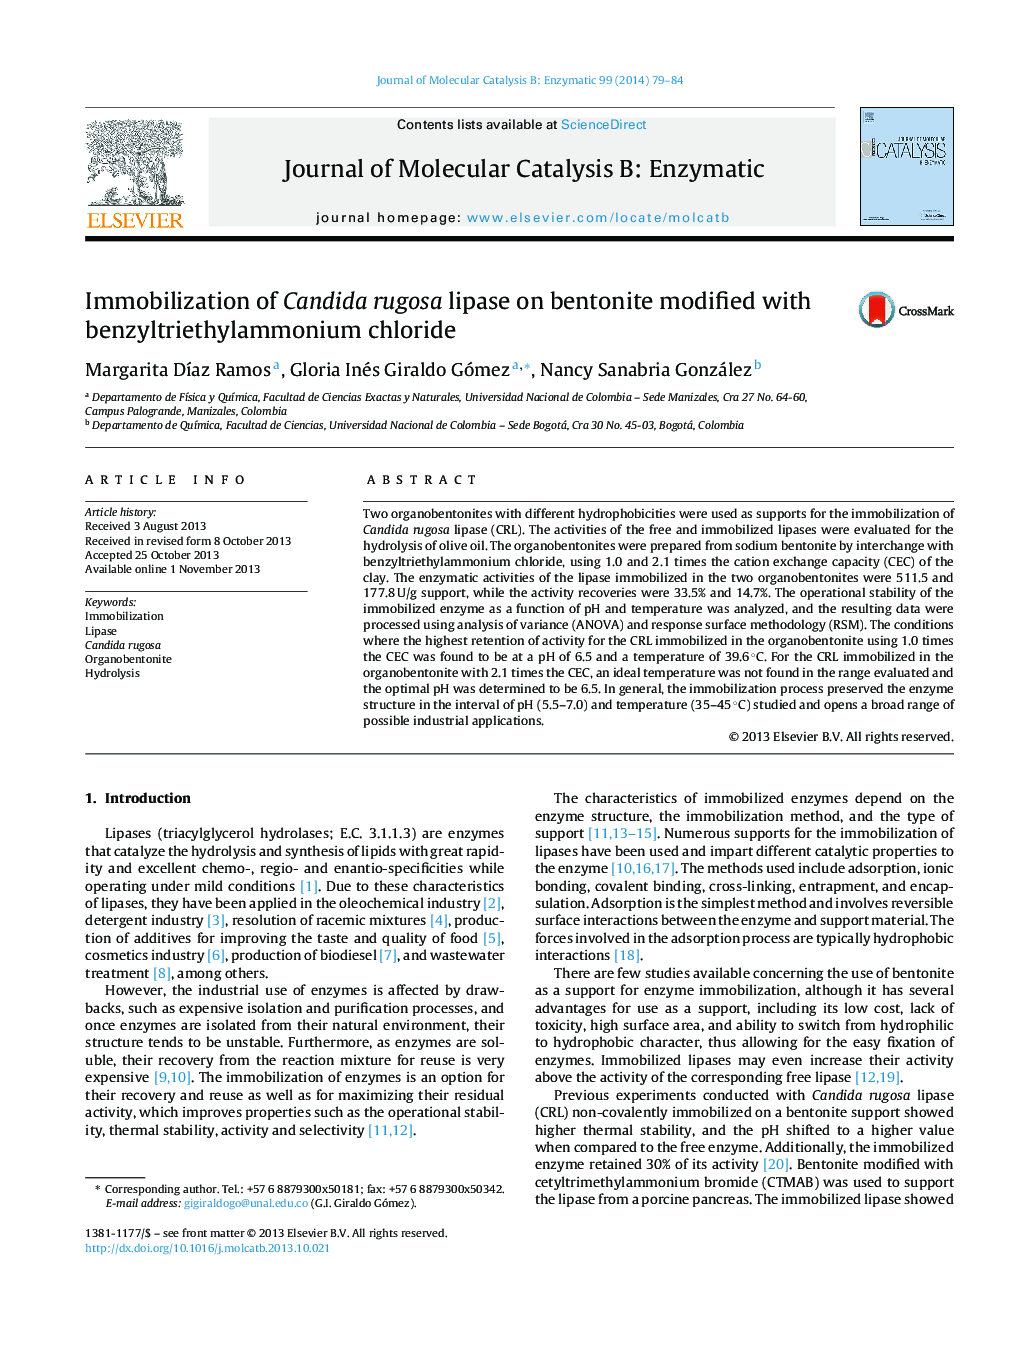 Immobilization of Candida rugosa lipase on bentonite modified with benzyltriethylammonium chloride